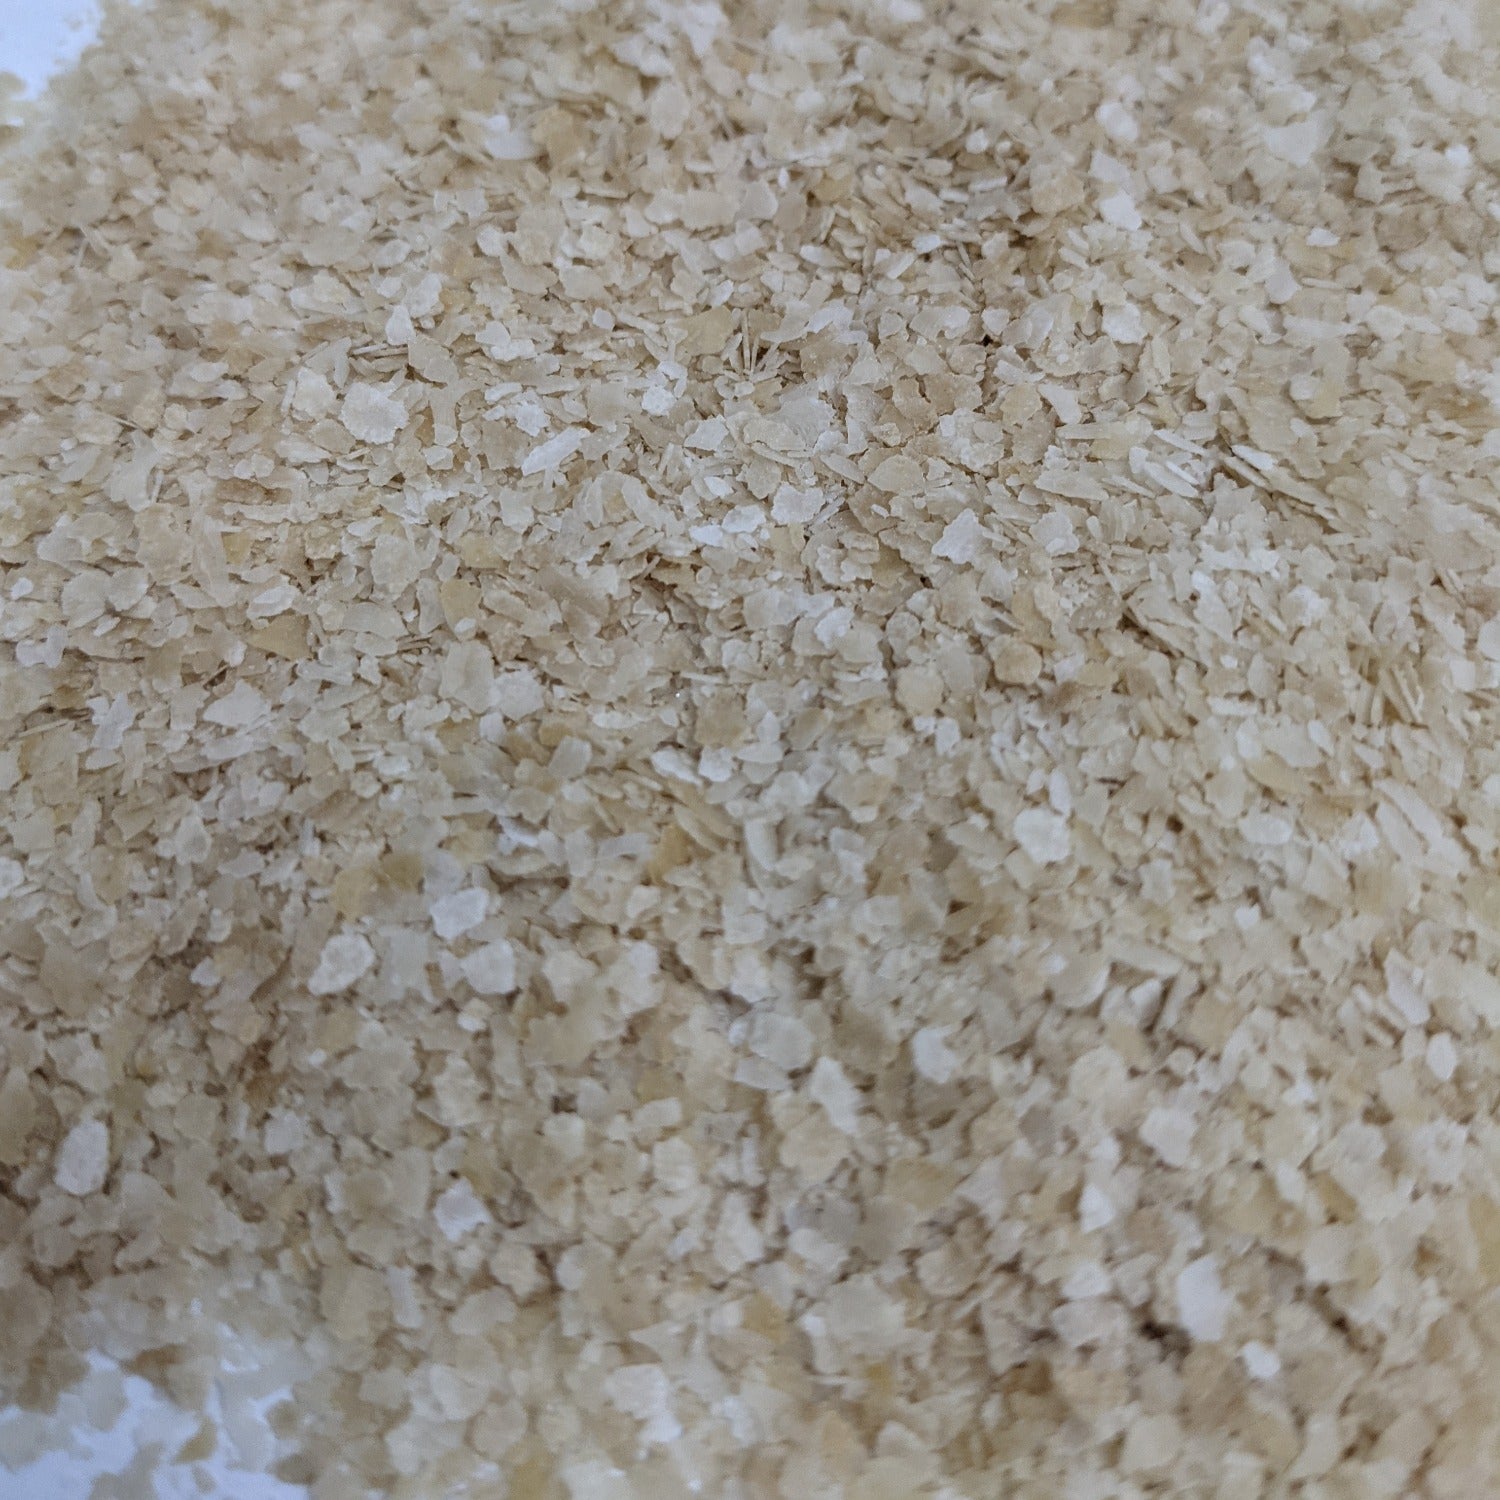 Hickory Smoked Salt – USA Seasonings